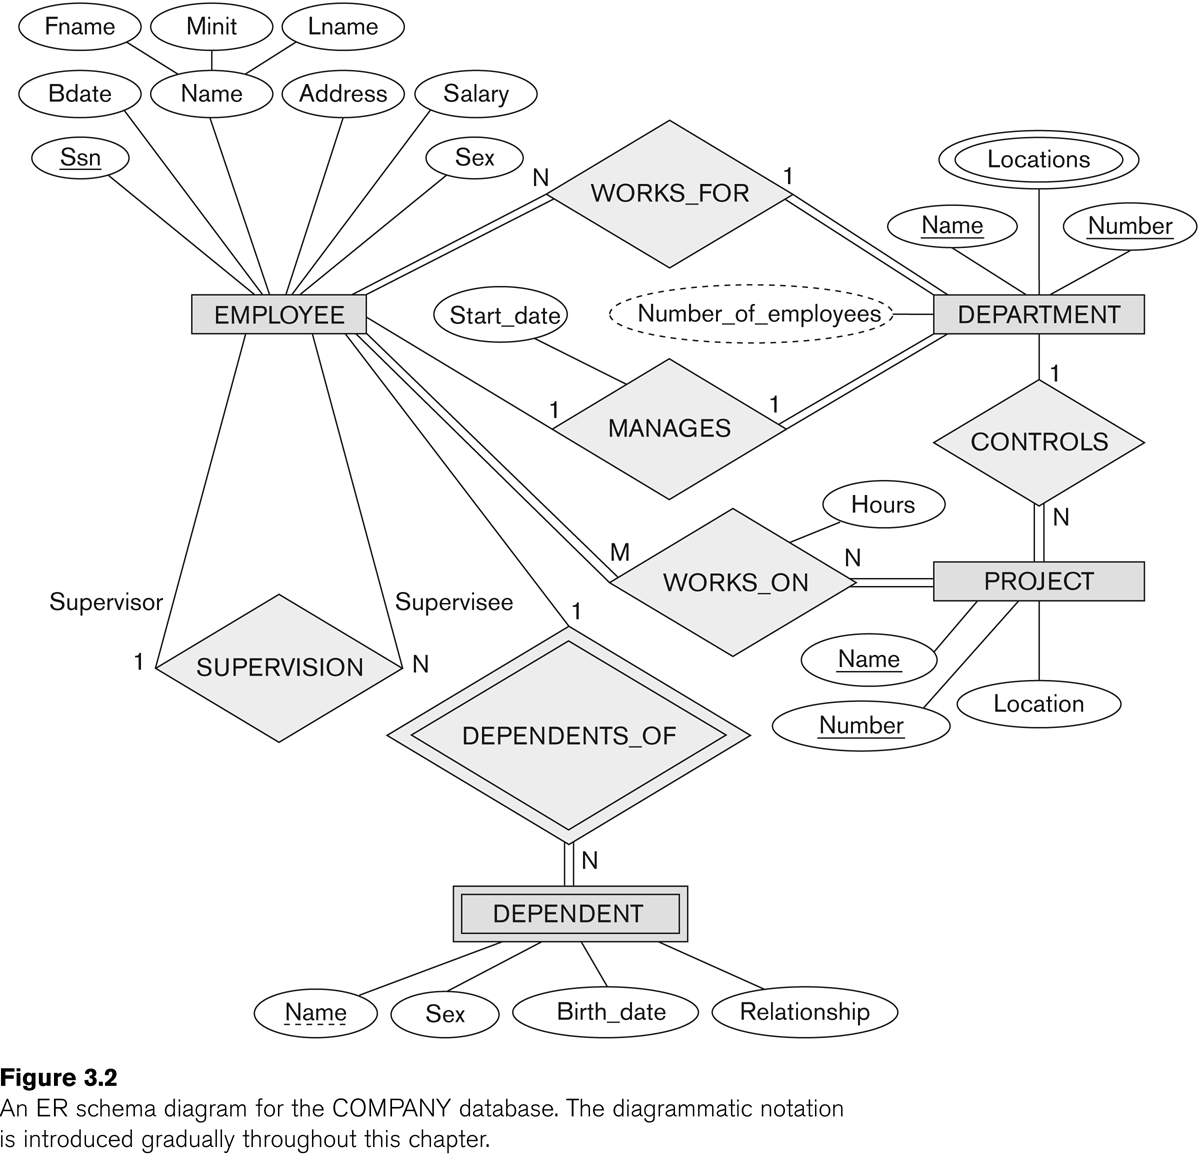 Entity-Relationship Modeling for Entity Relationship Diagram Explained